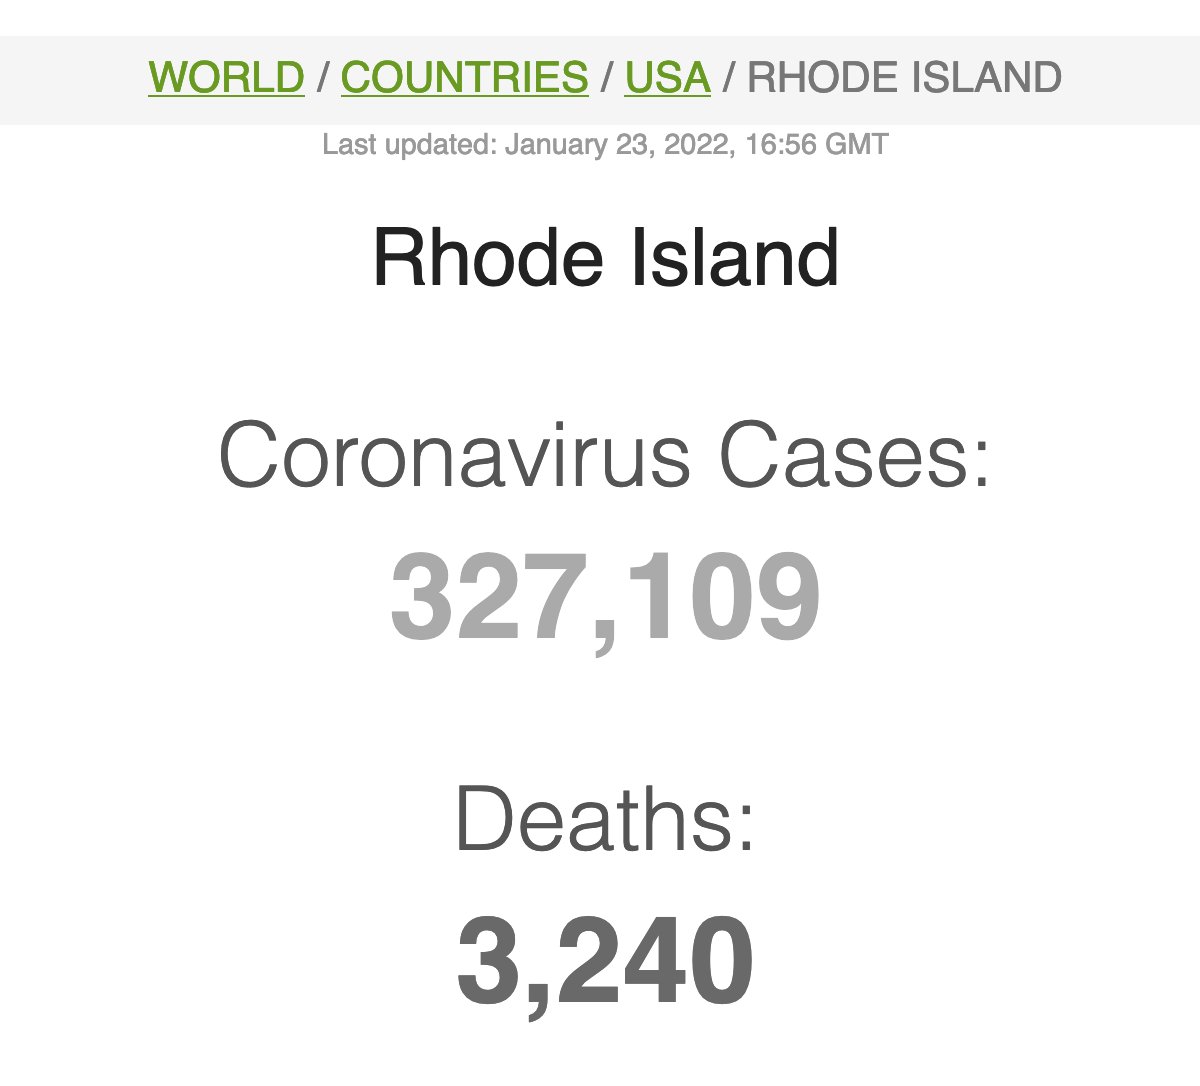 Less than 200 #COVID19 deaths 
separate #RhodeIsland from #Australia 

It's very, very close...!

#NeckAndNeck #AmericanExceptionalismIsAtRisk 
#IamTheMapsDaddy #MapDaddy